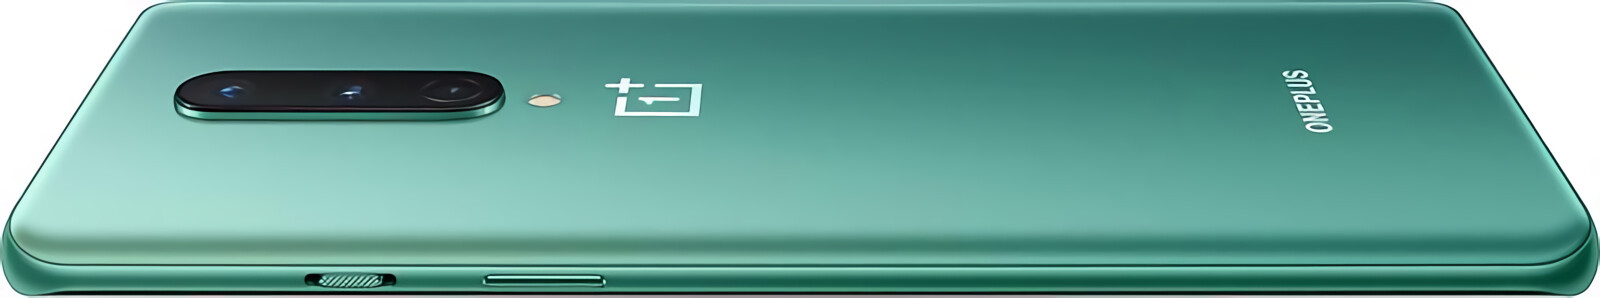 OnePlus 8 256GB